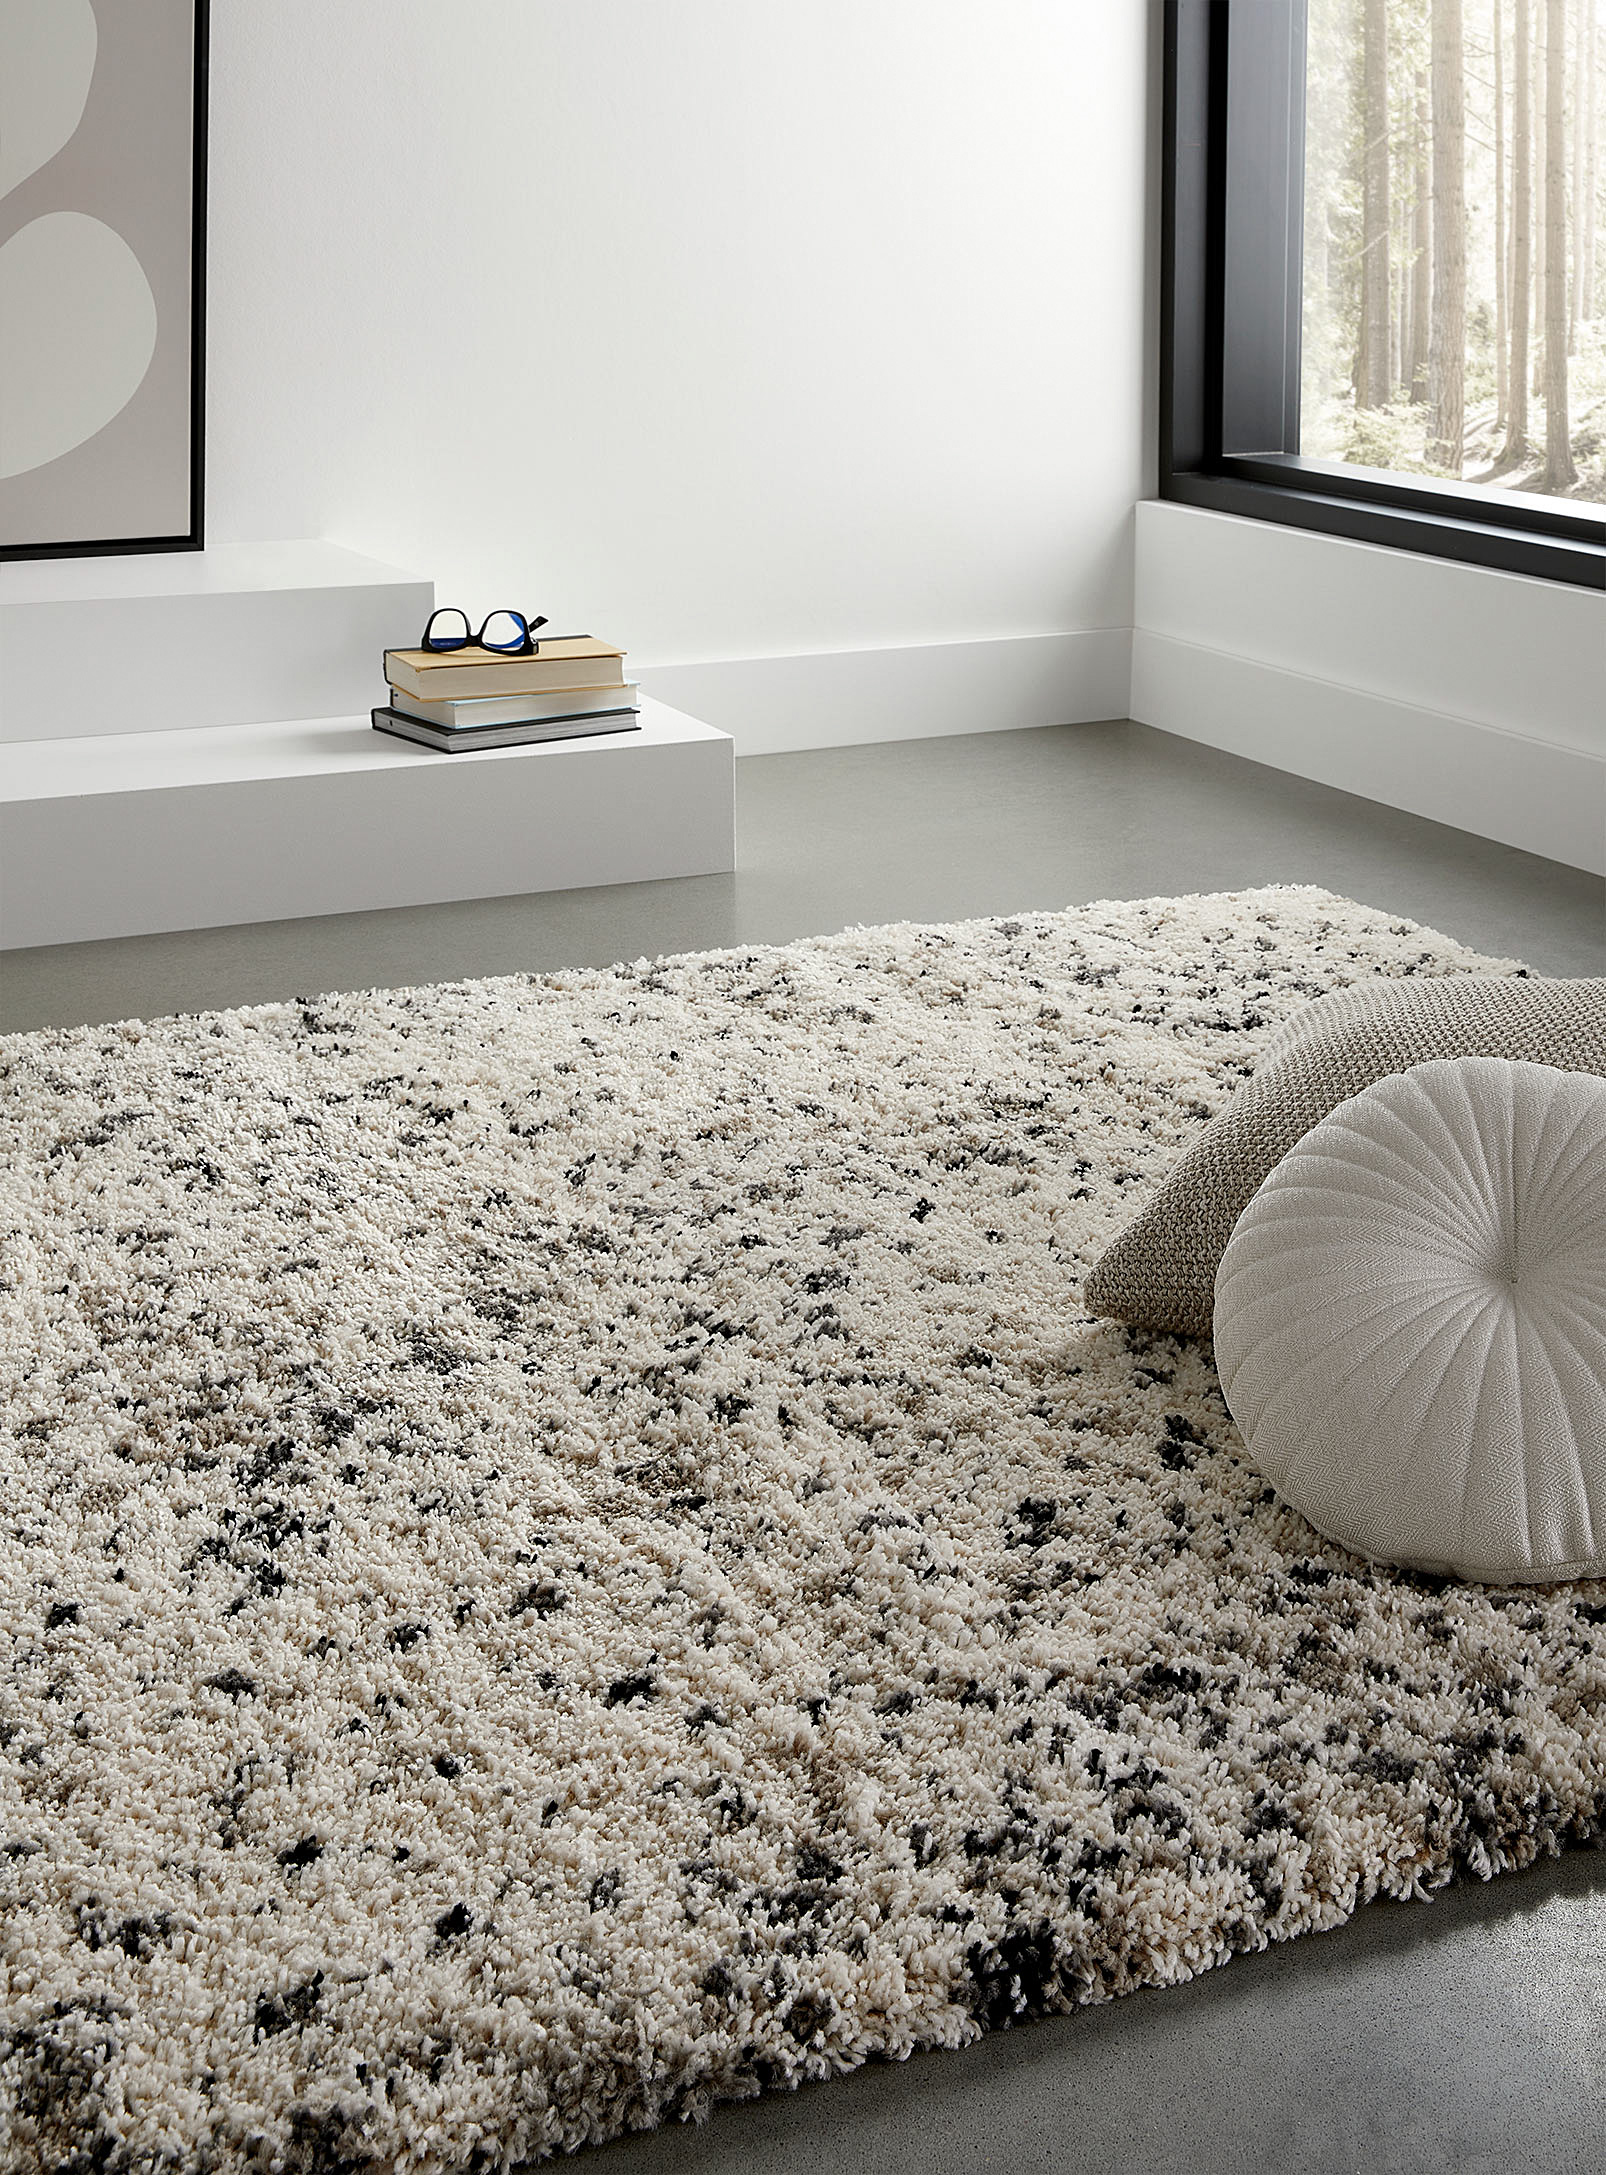 Simons Maison - Speckled sand shag rug See available sizes